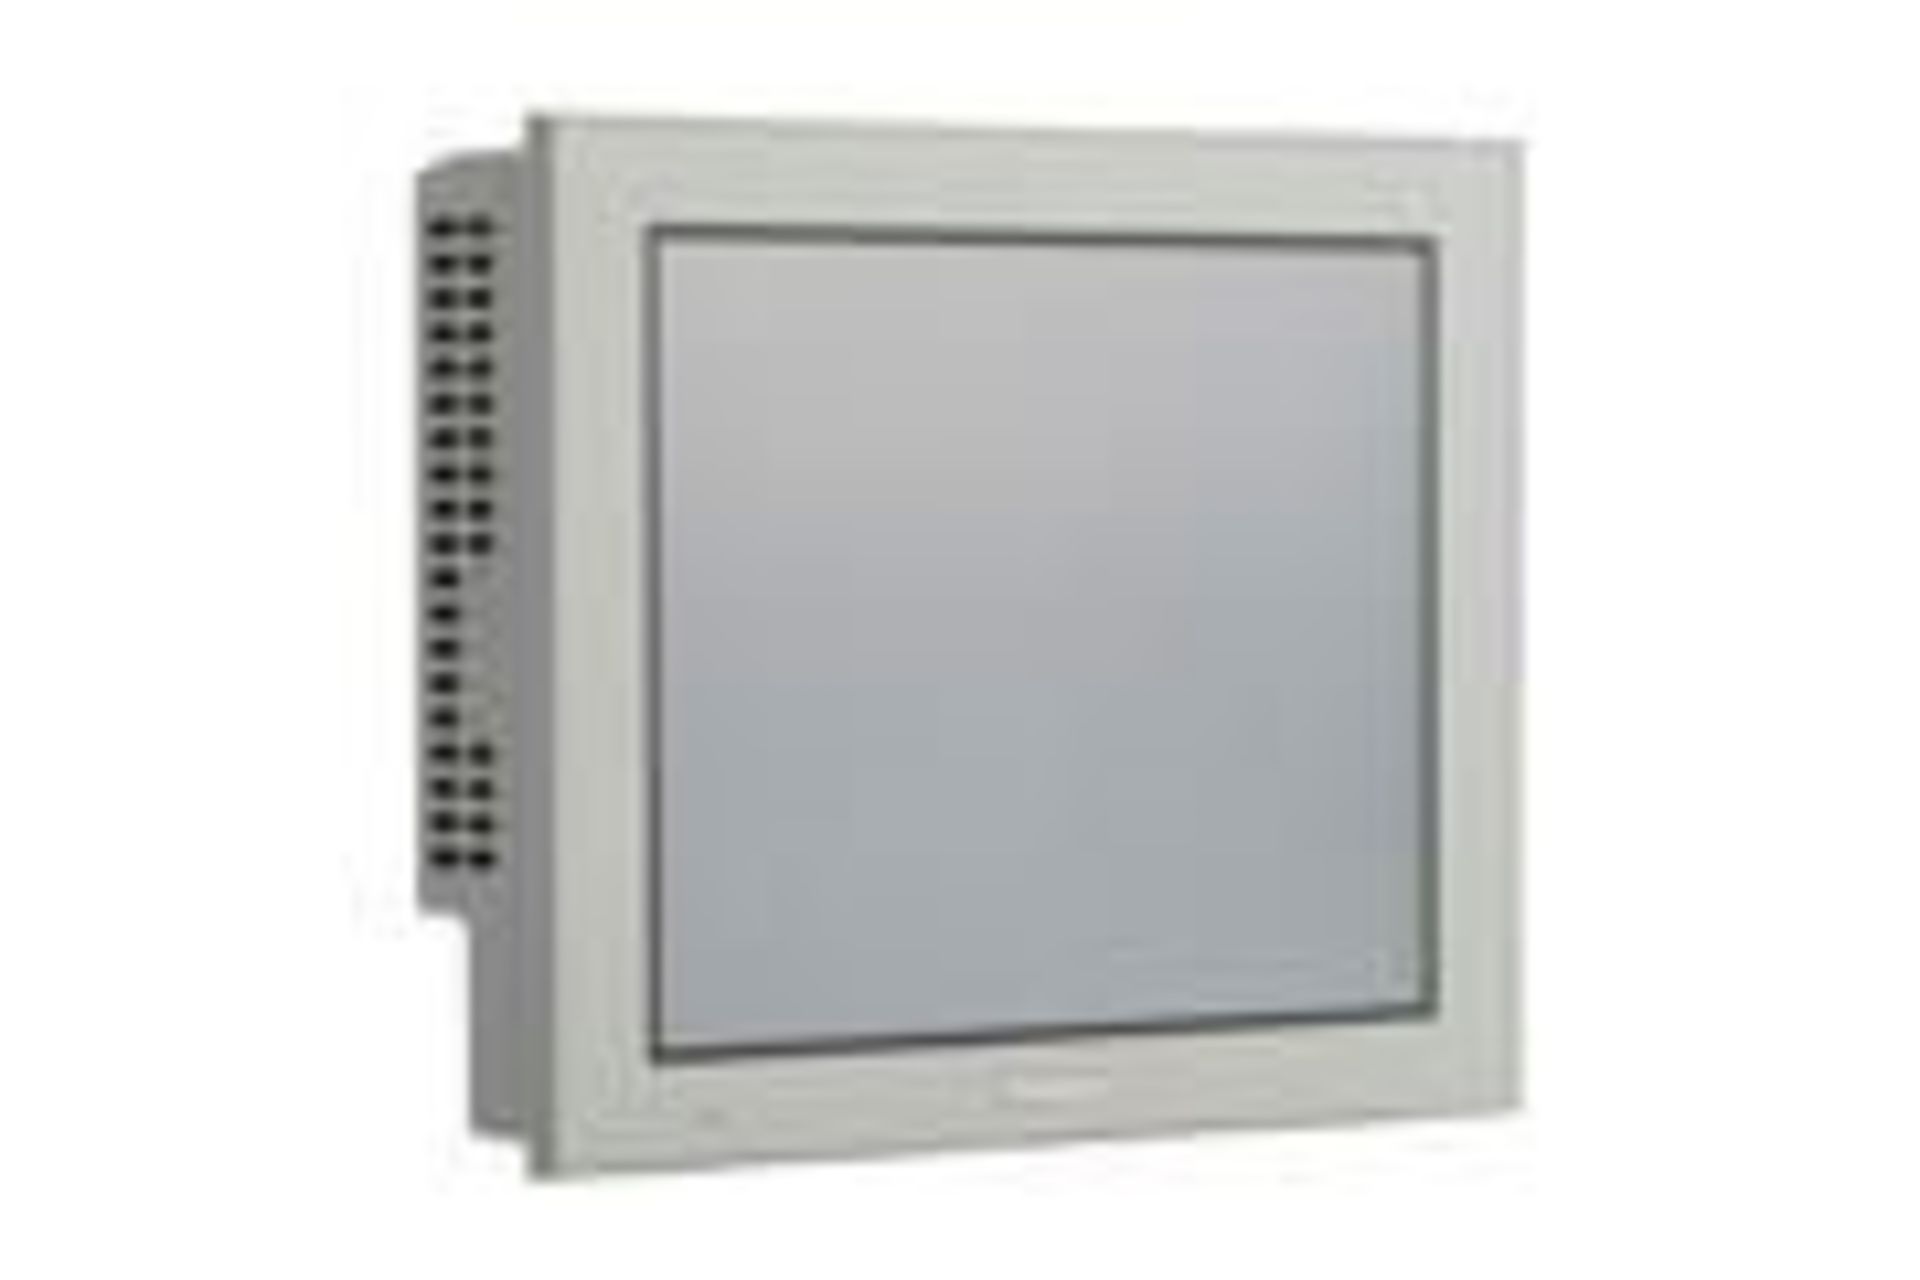 Pro-face GP4000 Series TFT Touch Screen HMI - 307.34 mm, TFT LCD Display, 800 x 600pixels